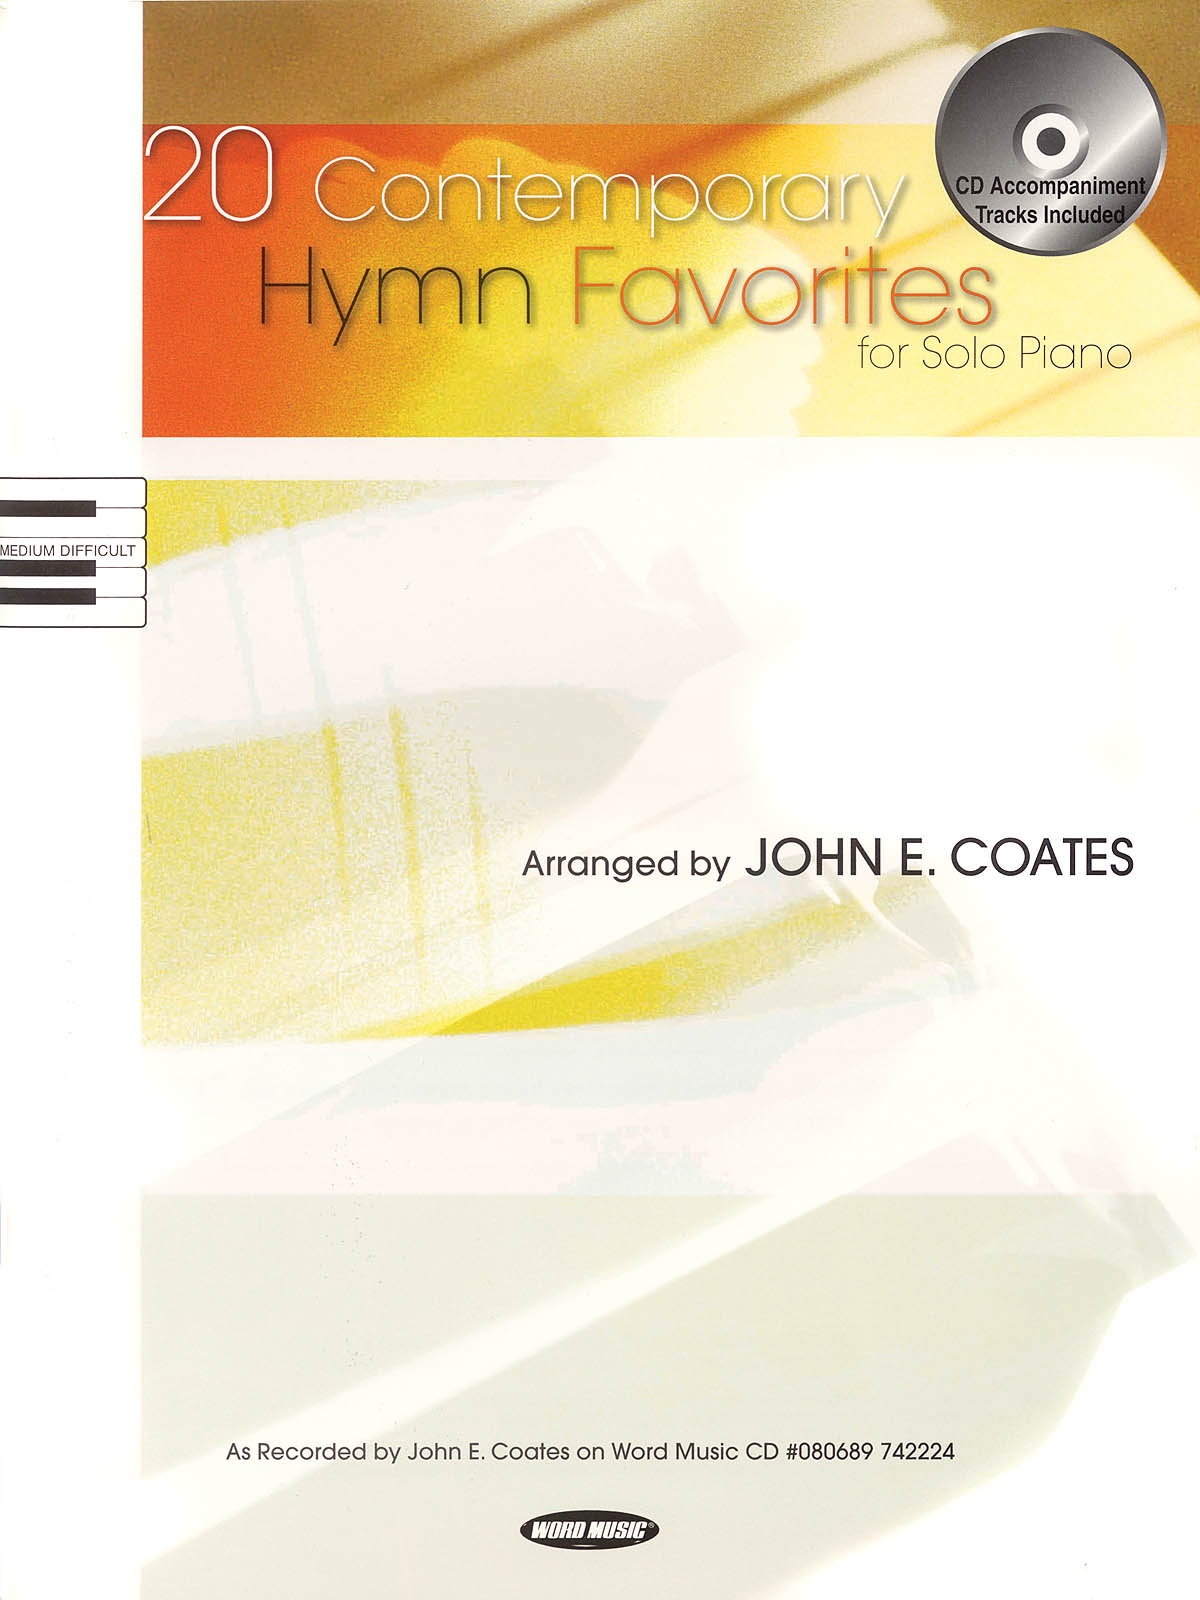 20 Contemporary Hymn Favorites For Solo Piano